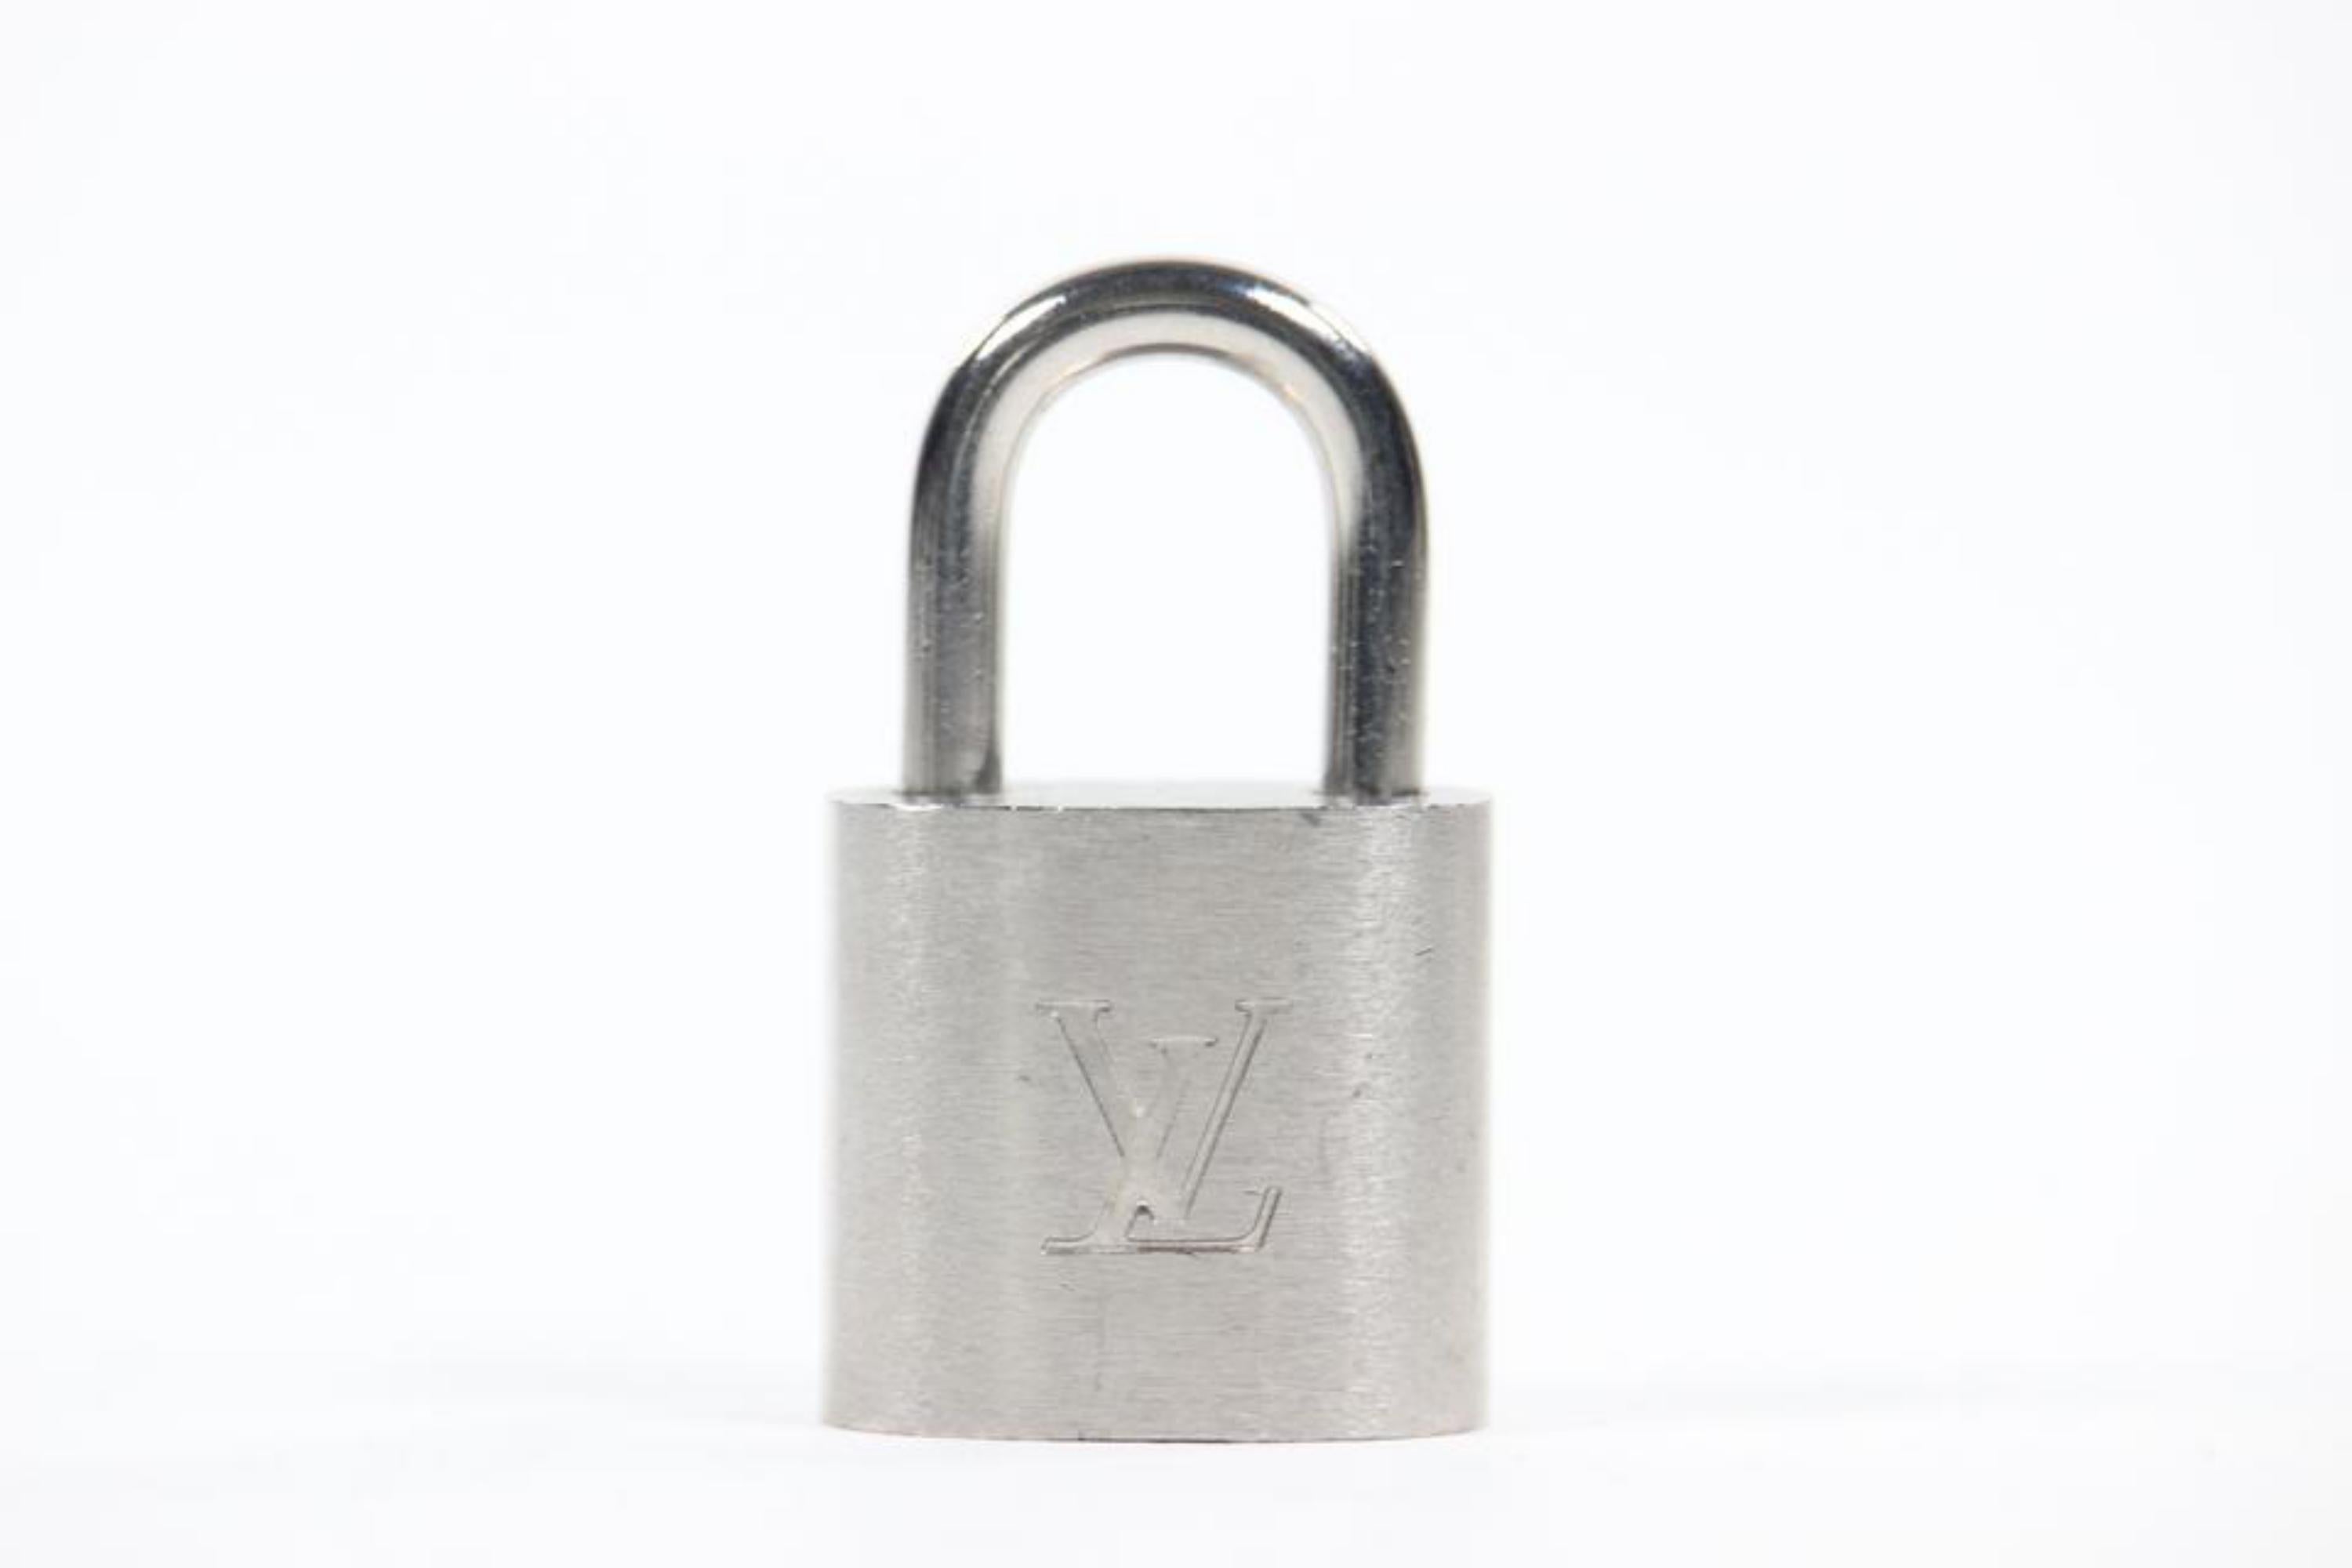 Louis Vuitton Brushed Silver Matte Padlock and Key Bag Charm Lock Set 7LZ1102 5